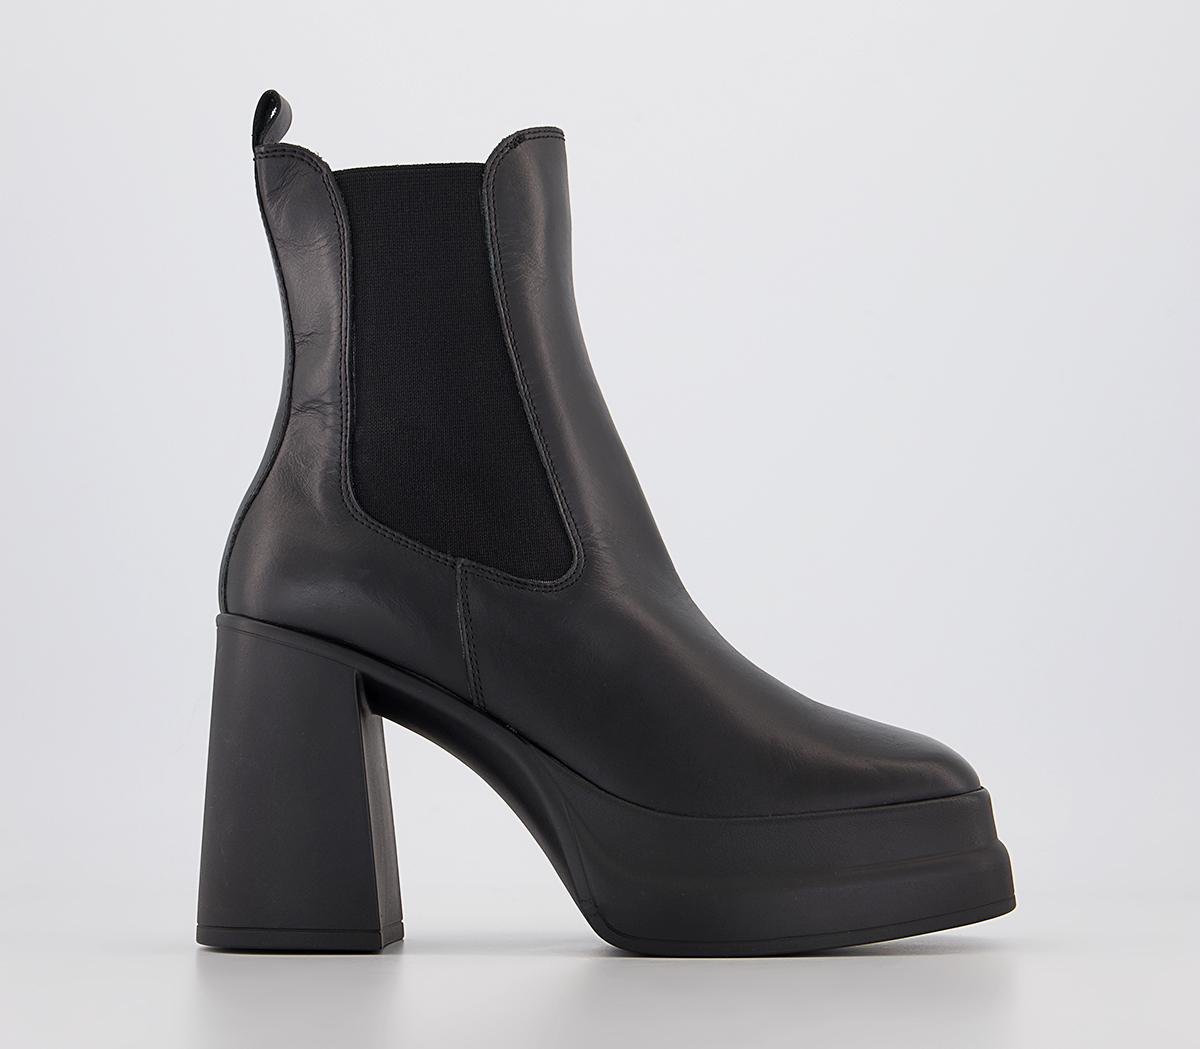 OFFICE Arke Platform Block Heel Ankle Boots Black Leather - Women's ...